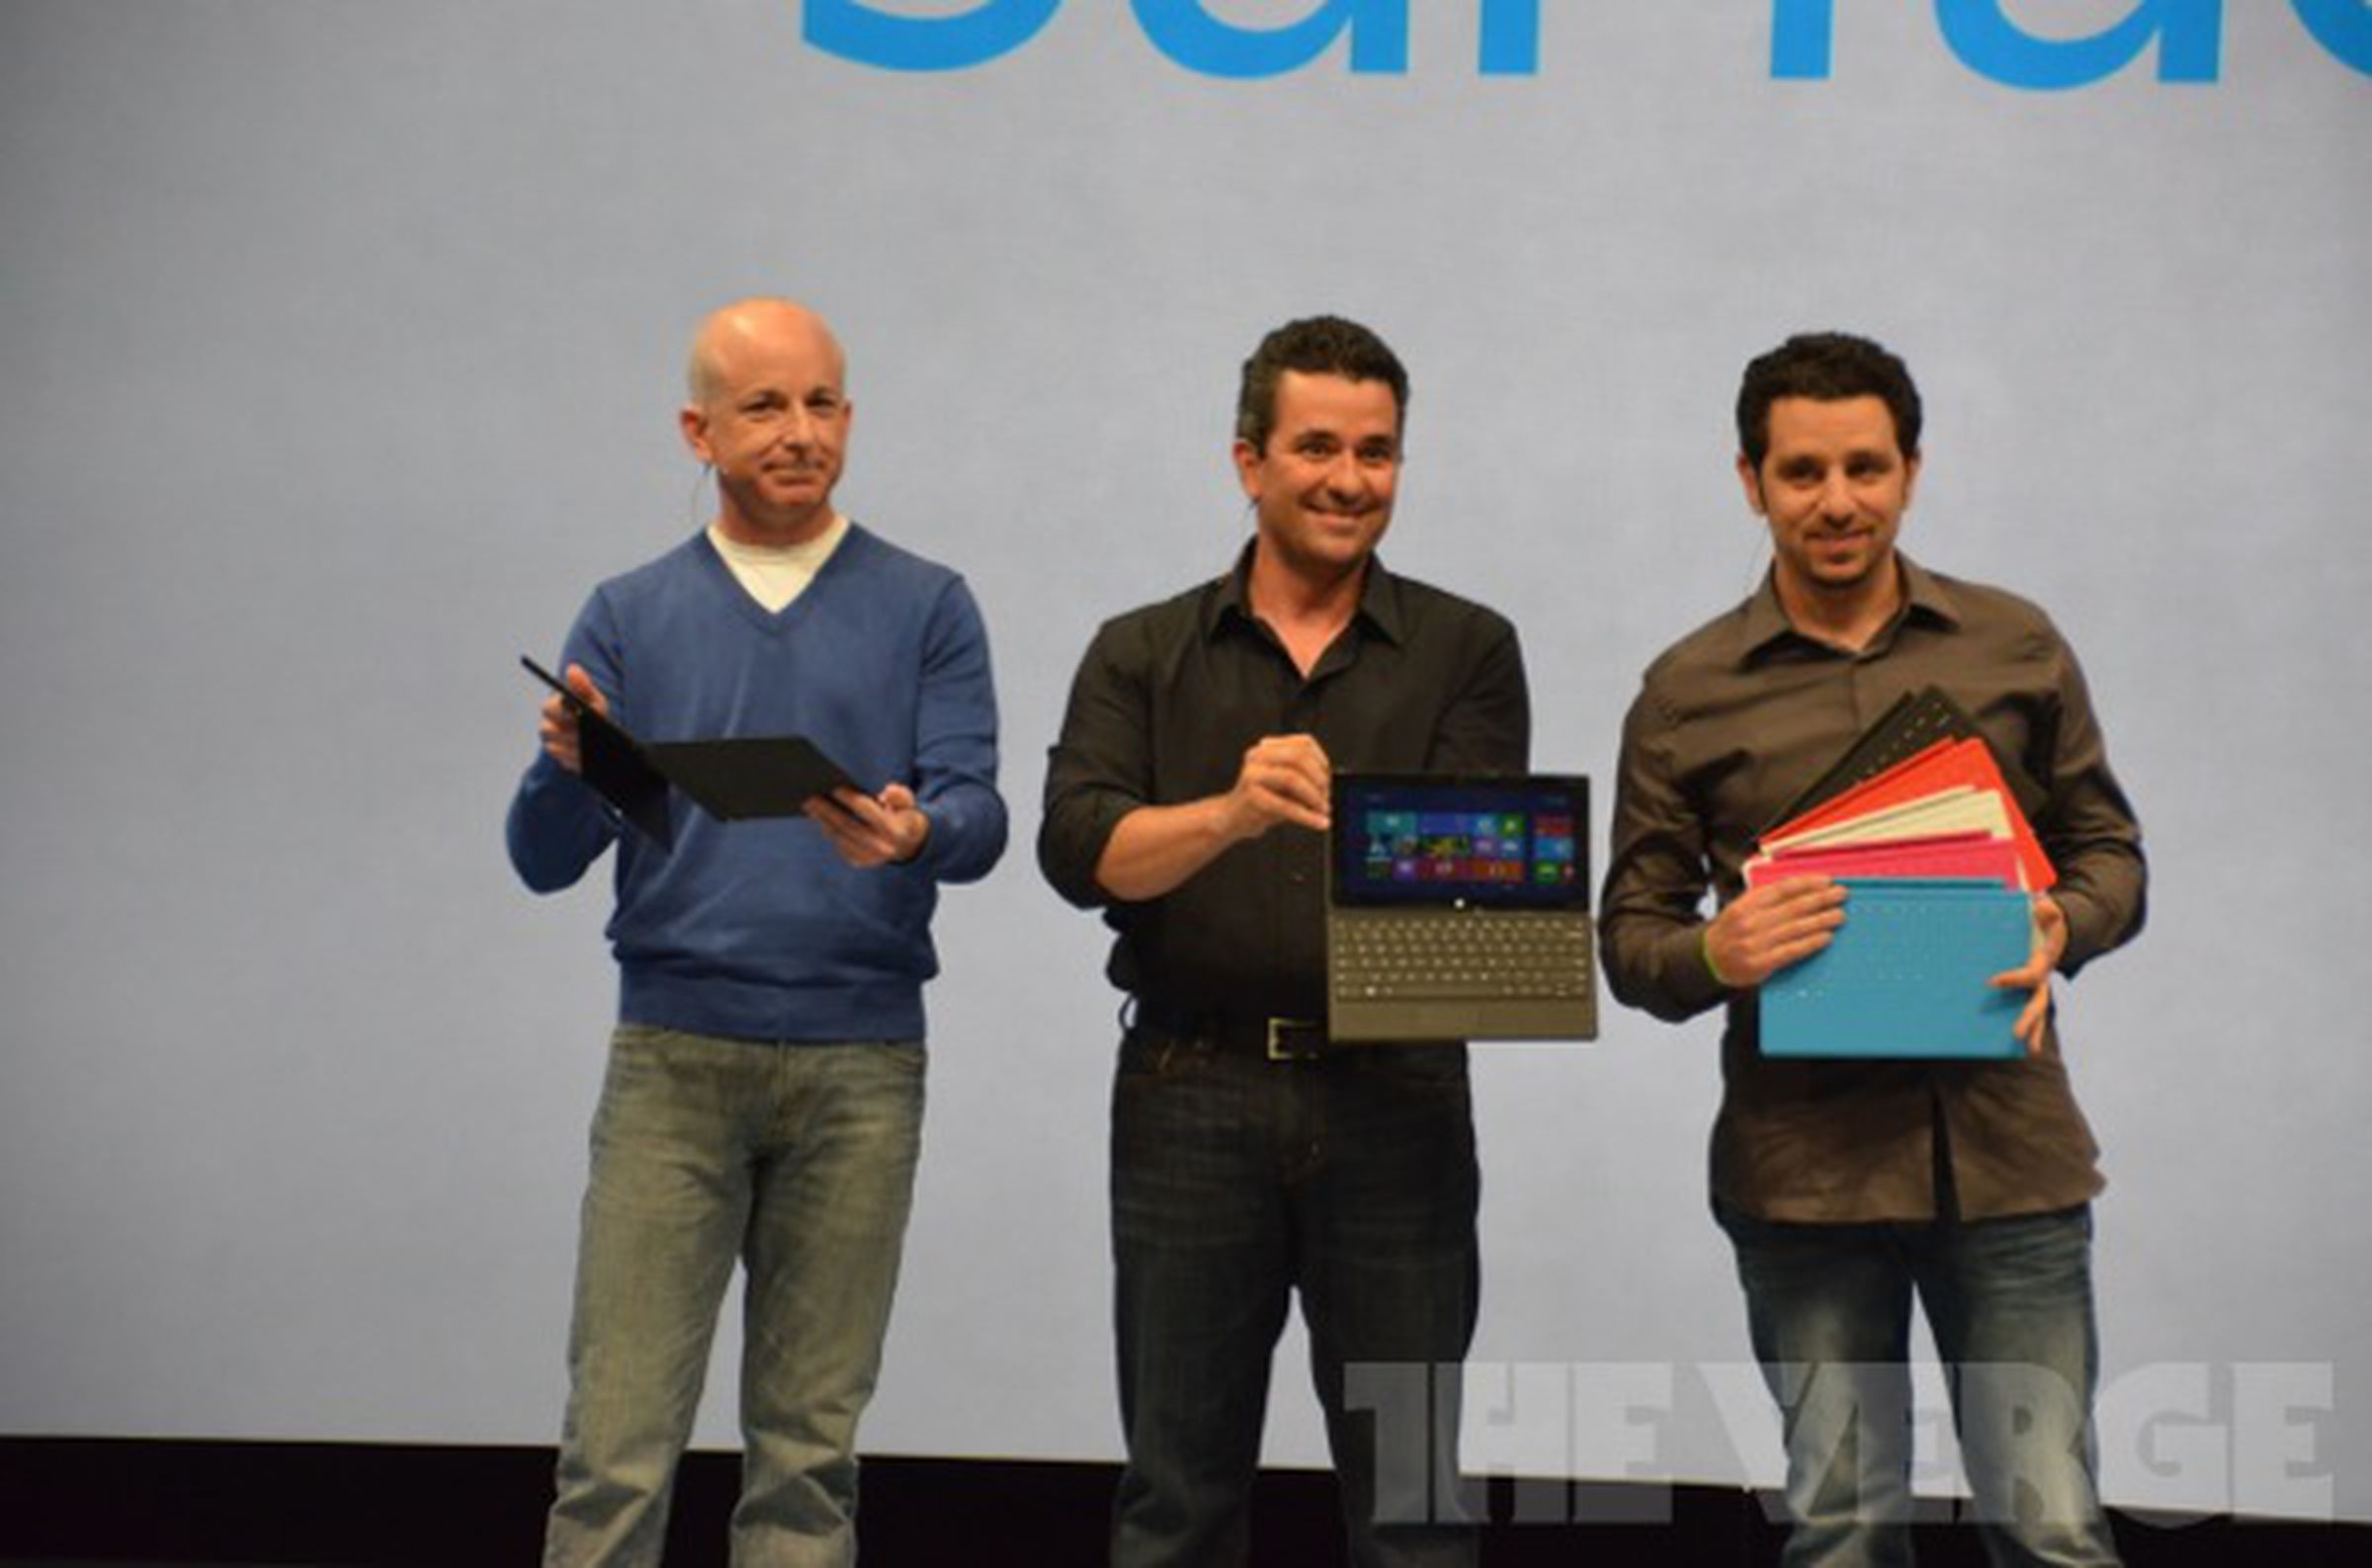 Microsoft Surface tablet liveblog pictures 